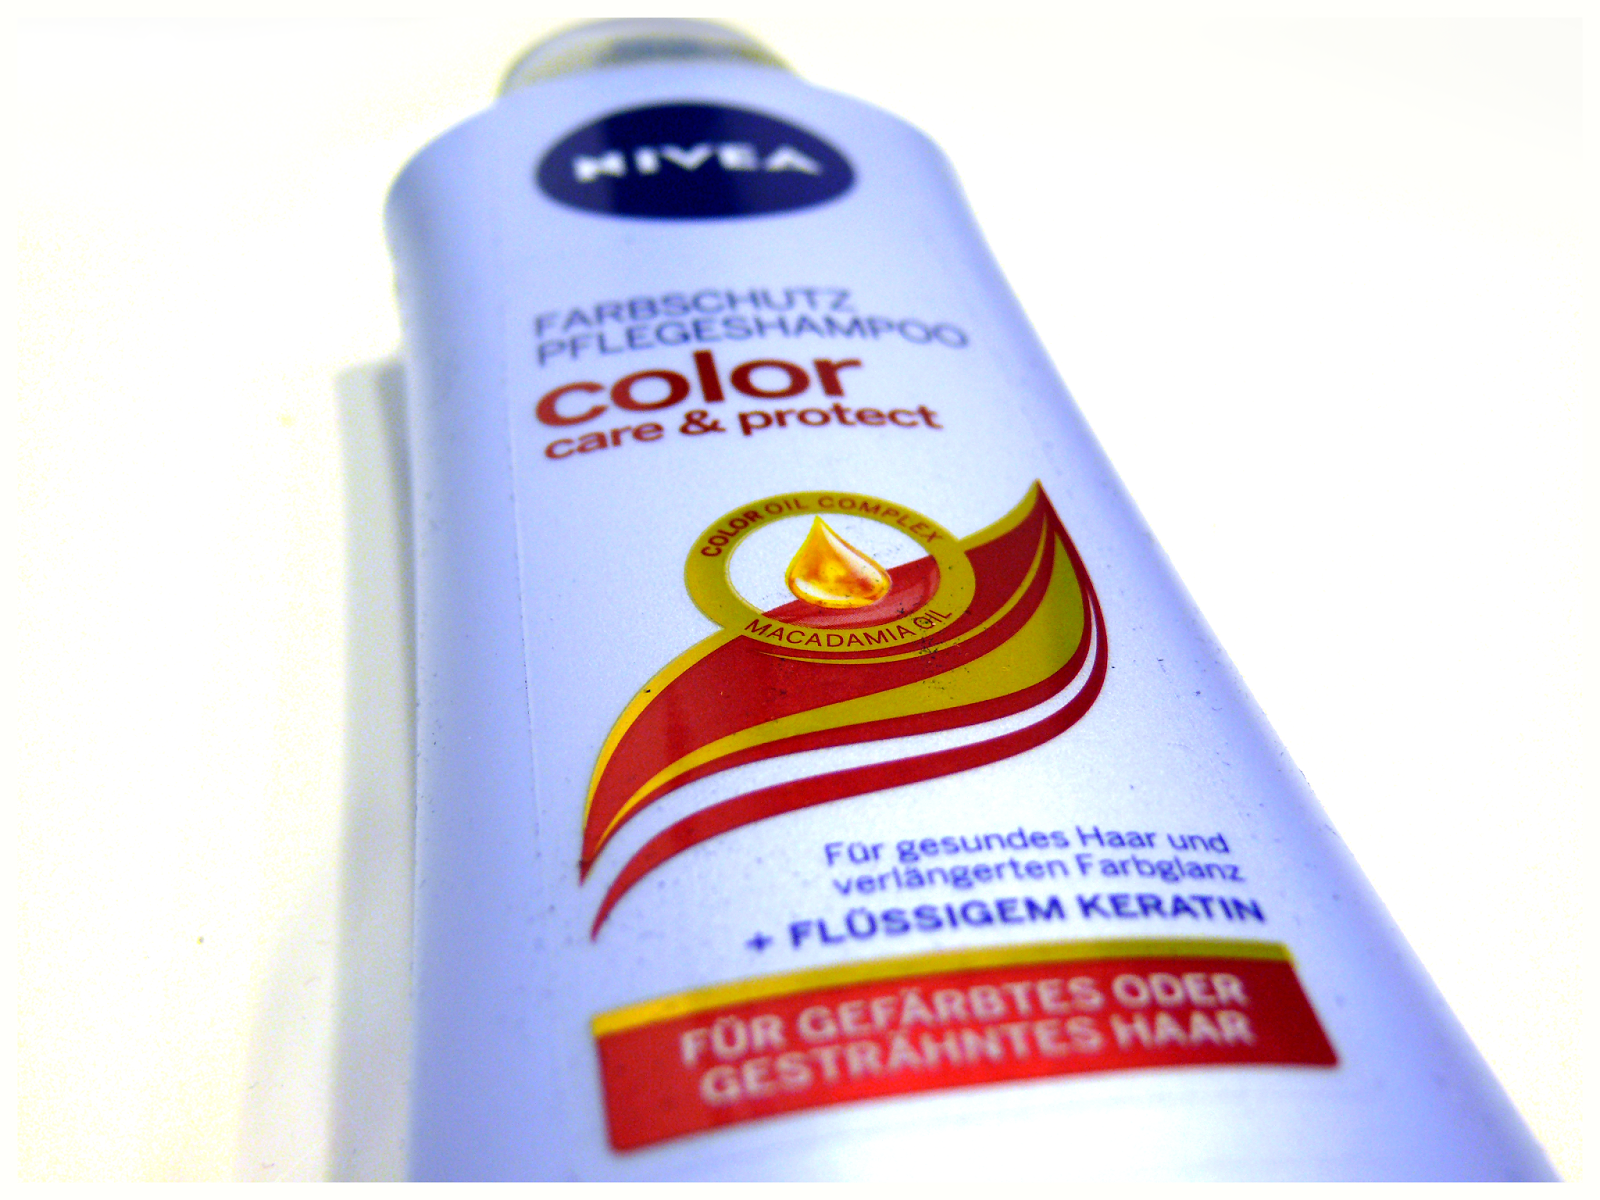  Nivea Color & Care Protect Farbschutz Pflegeshampoo 250ml Glossybox Januar 2015 Österreich